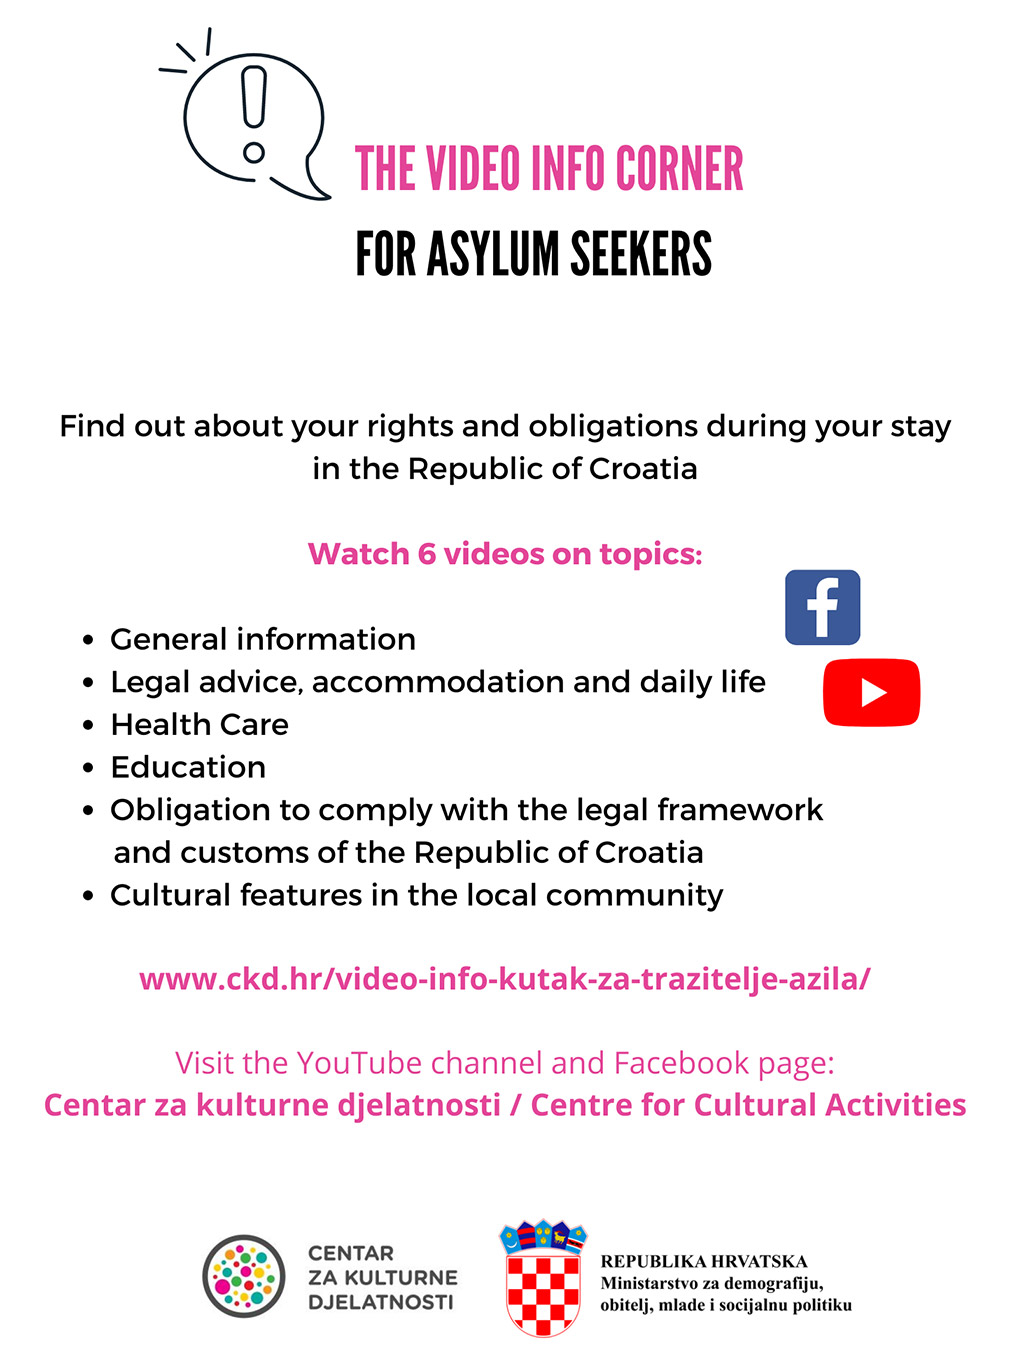 The Video Info Corner for Asylum Seekers